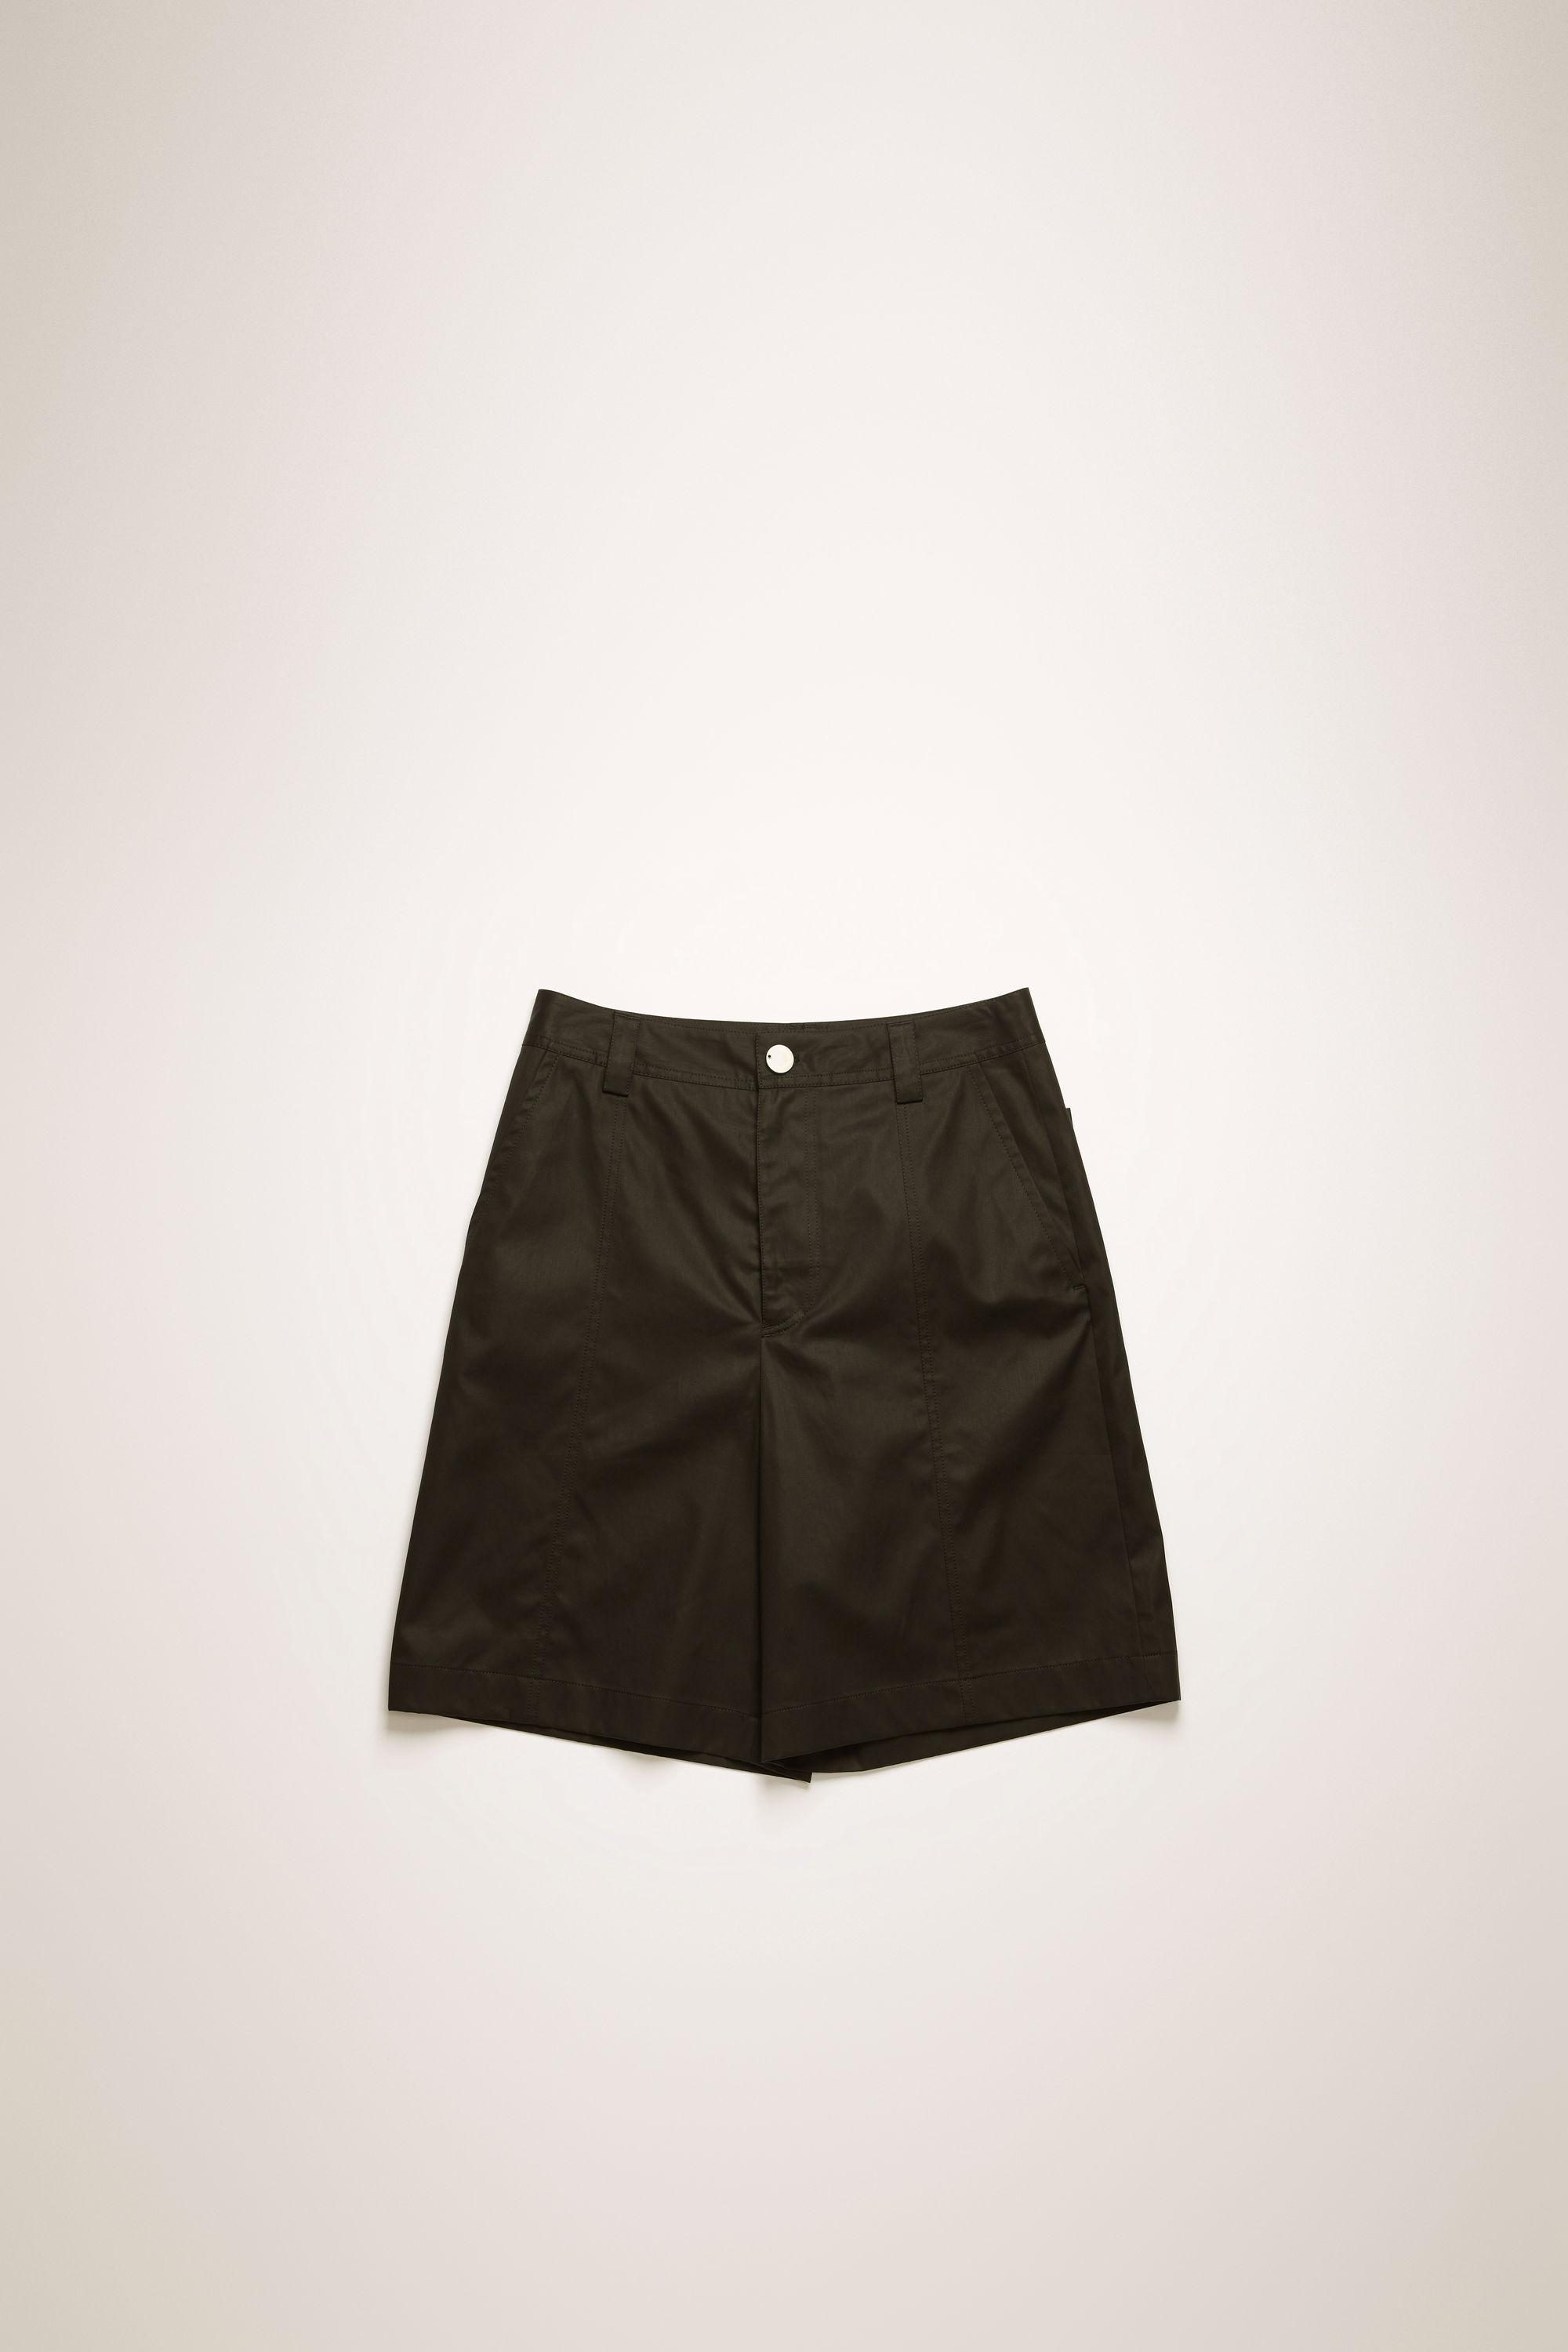 Acne Studios Wide-leg Cotton Shorts in Black for Men - Lyst